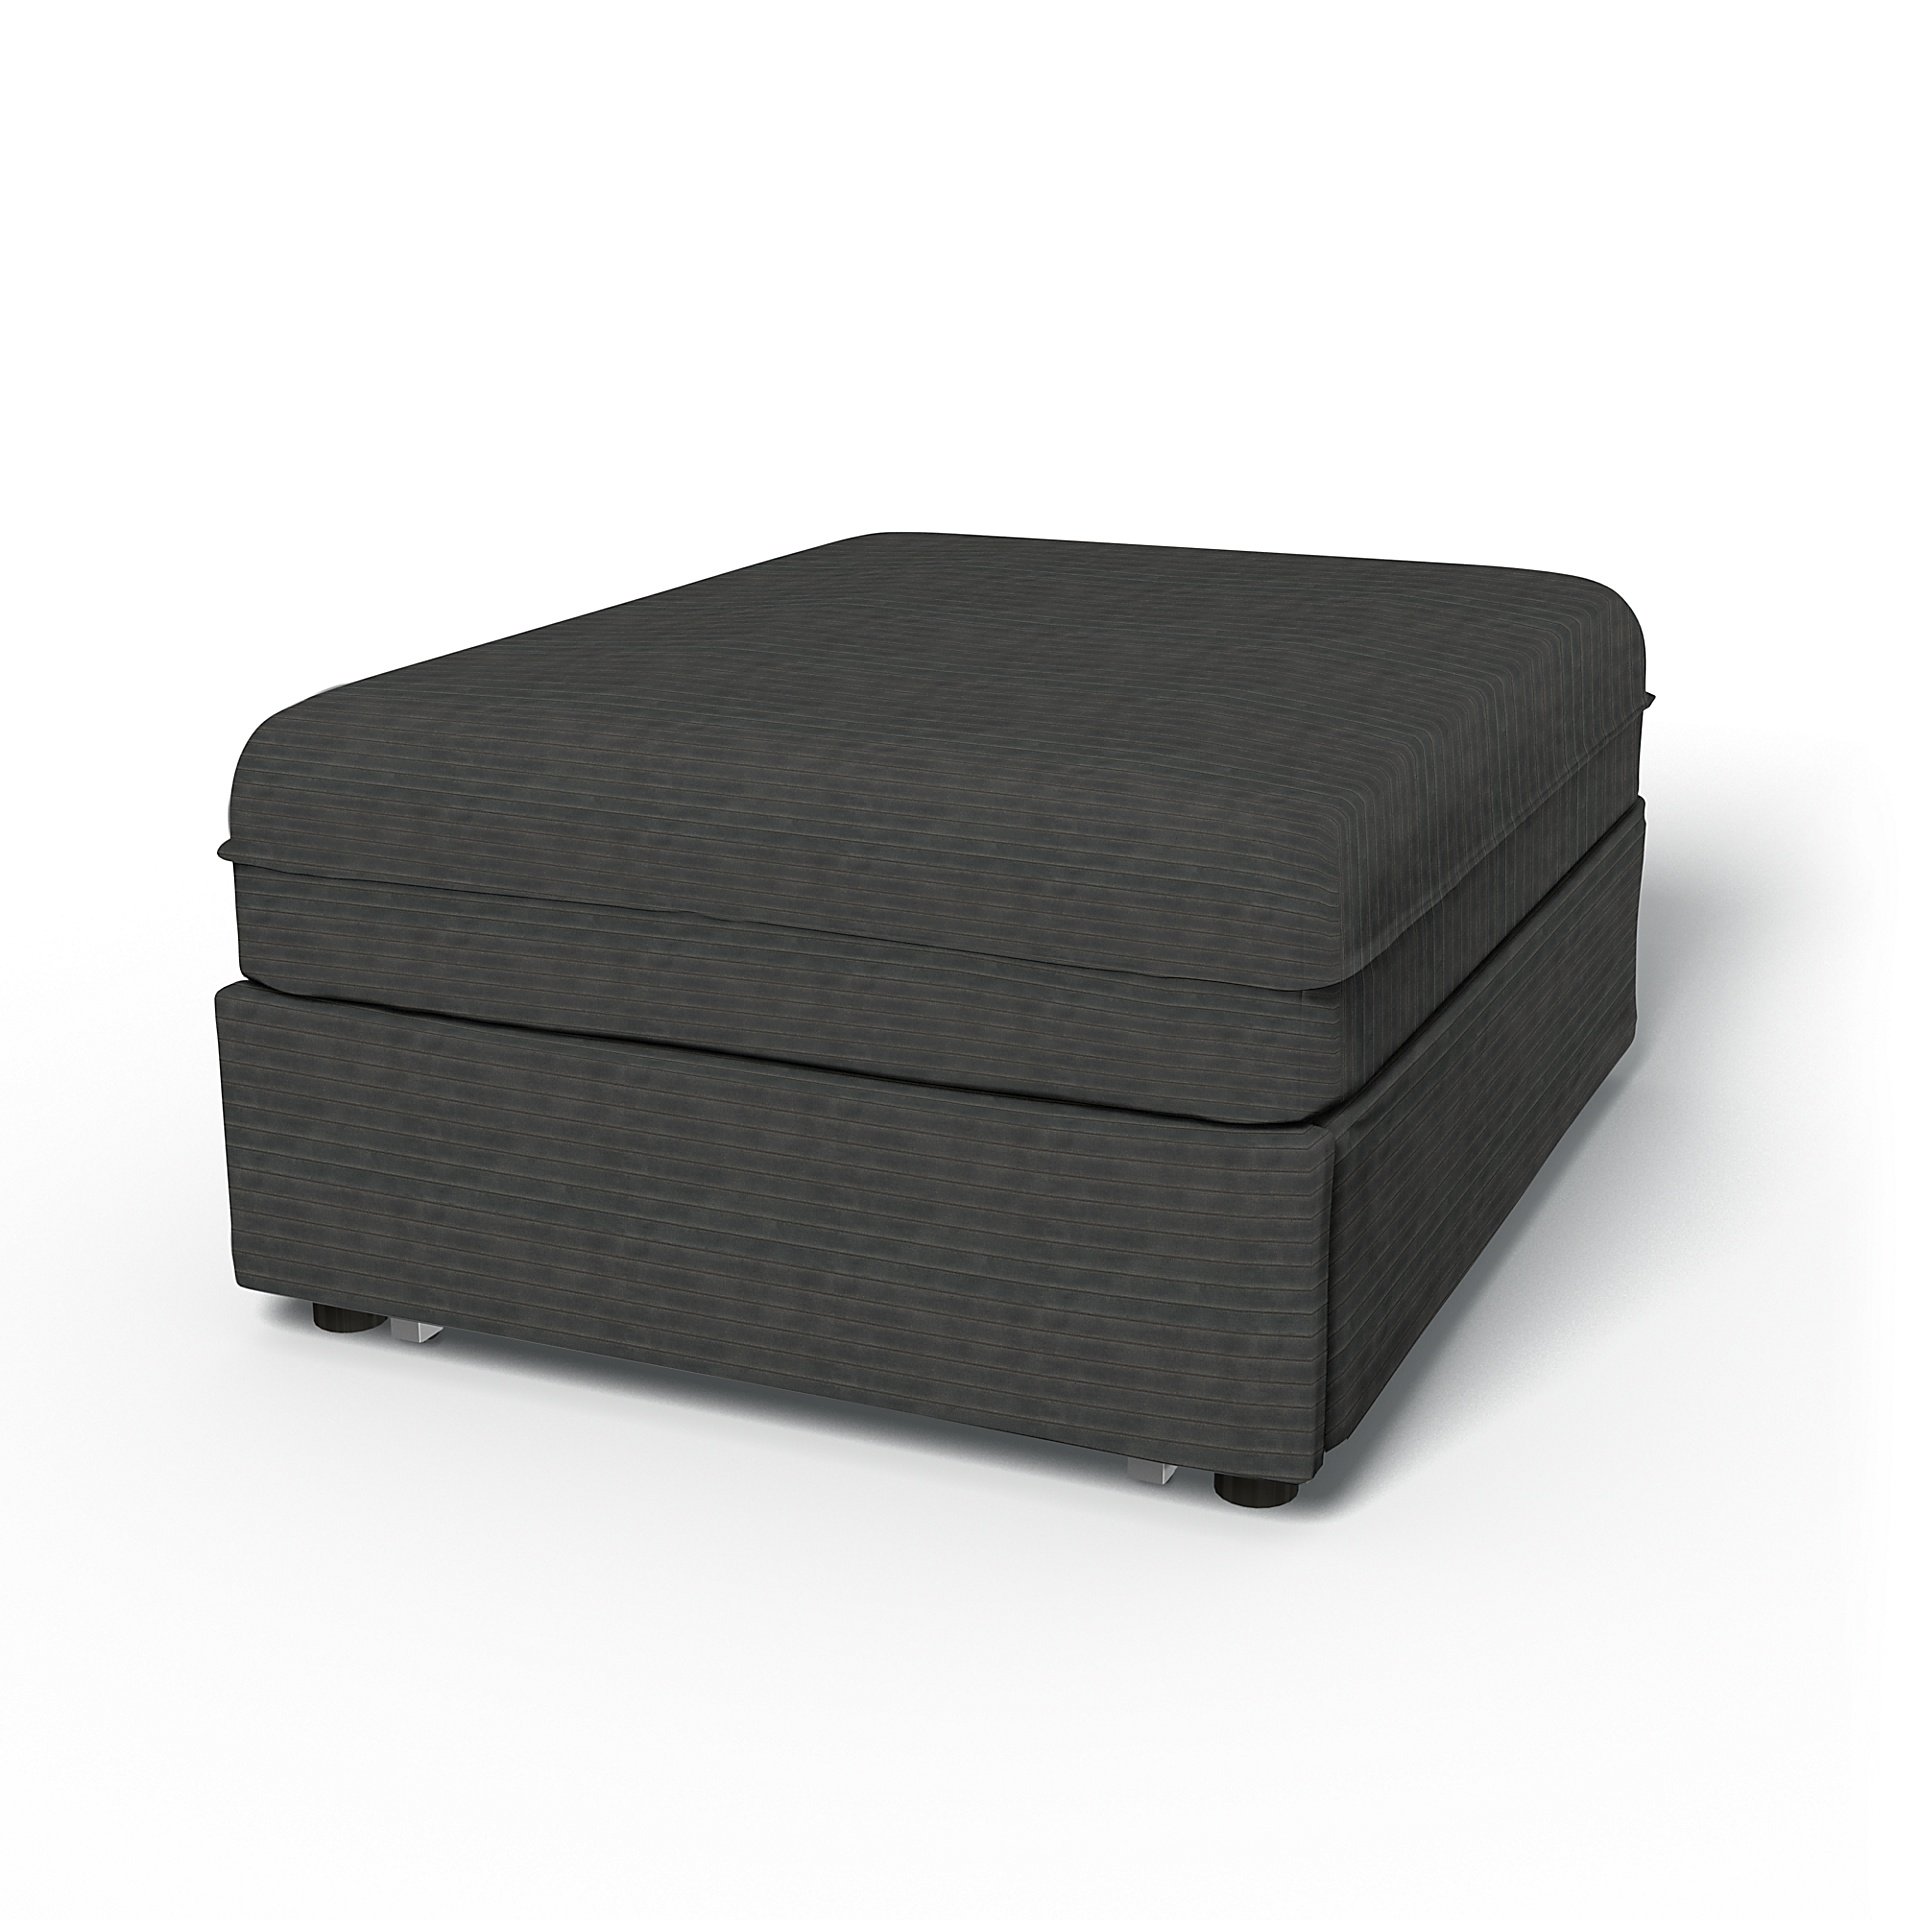 IKEA - Vallentuna Seat Module with Sofa Bed Cover 80x100cm 32x39in, Licorice, Corduroy - Bemz